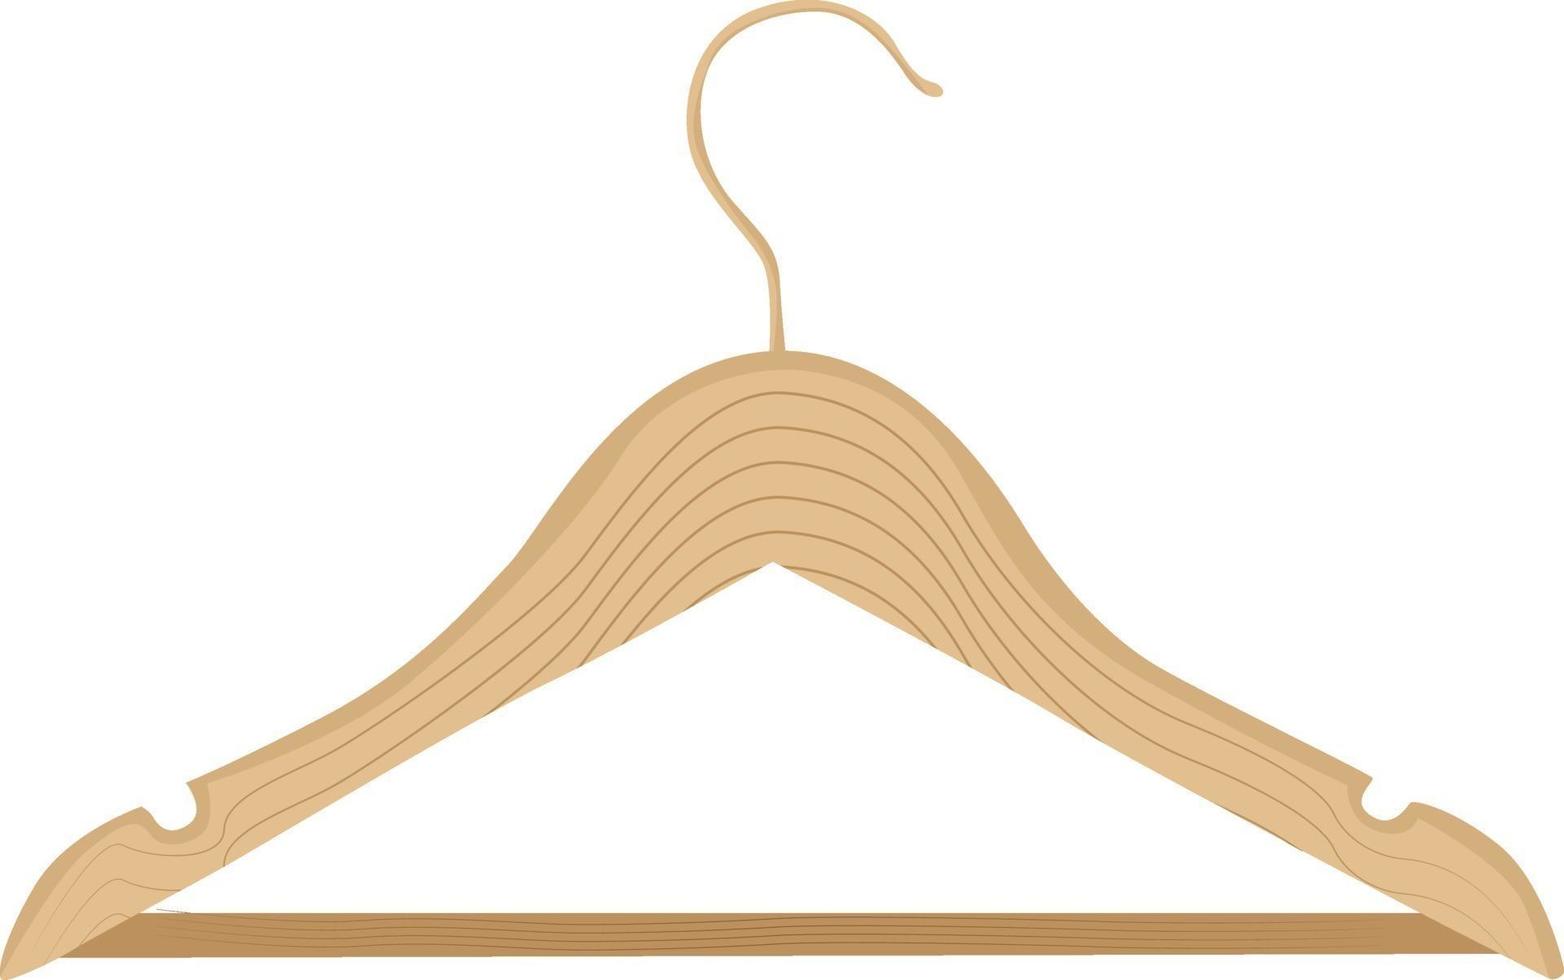 Wooden hanger, illustration, vector on a white background.